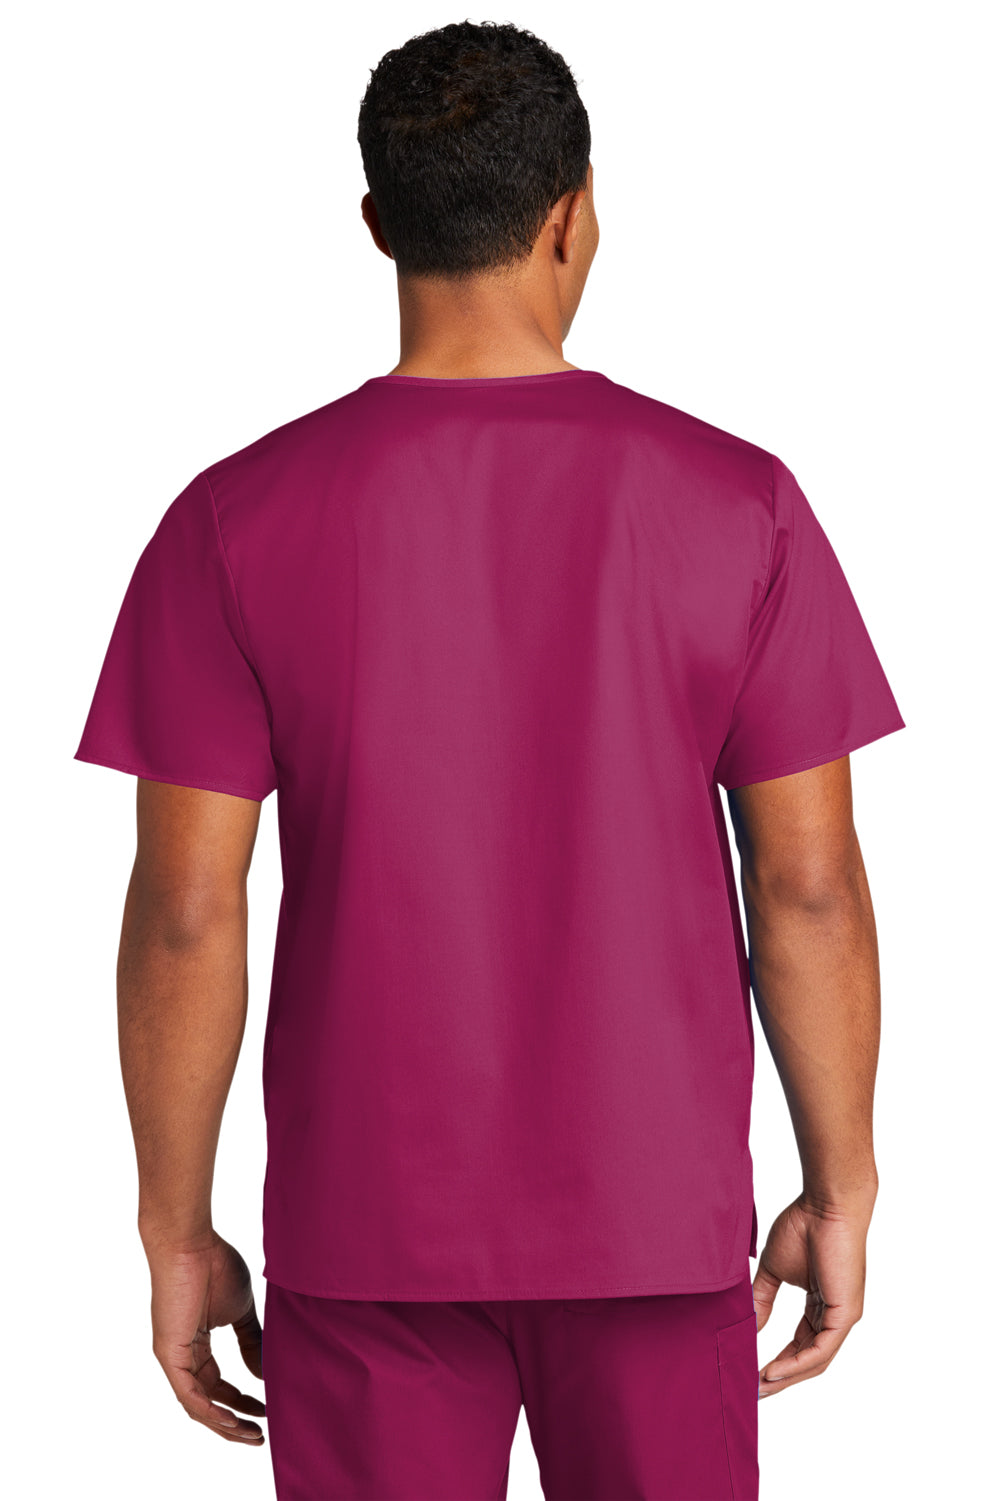 Wonderwink WW3160 WorkFlex Short Sleeve V-Neck Shirt w/ Pocket Wine Back